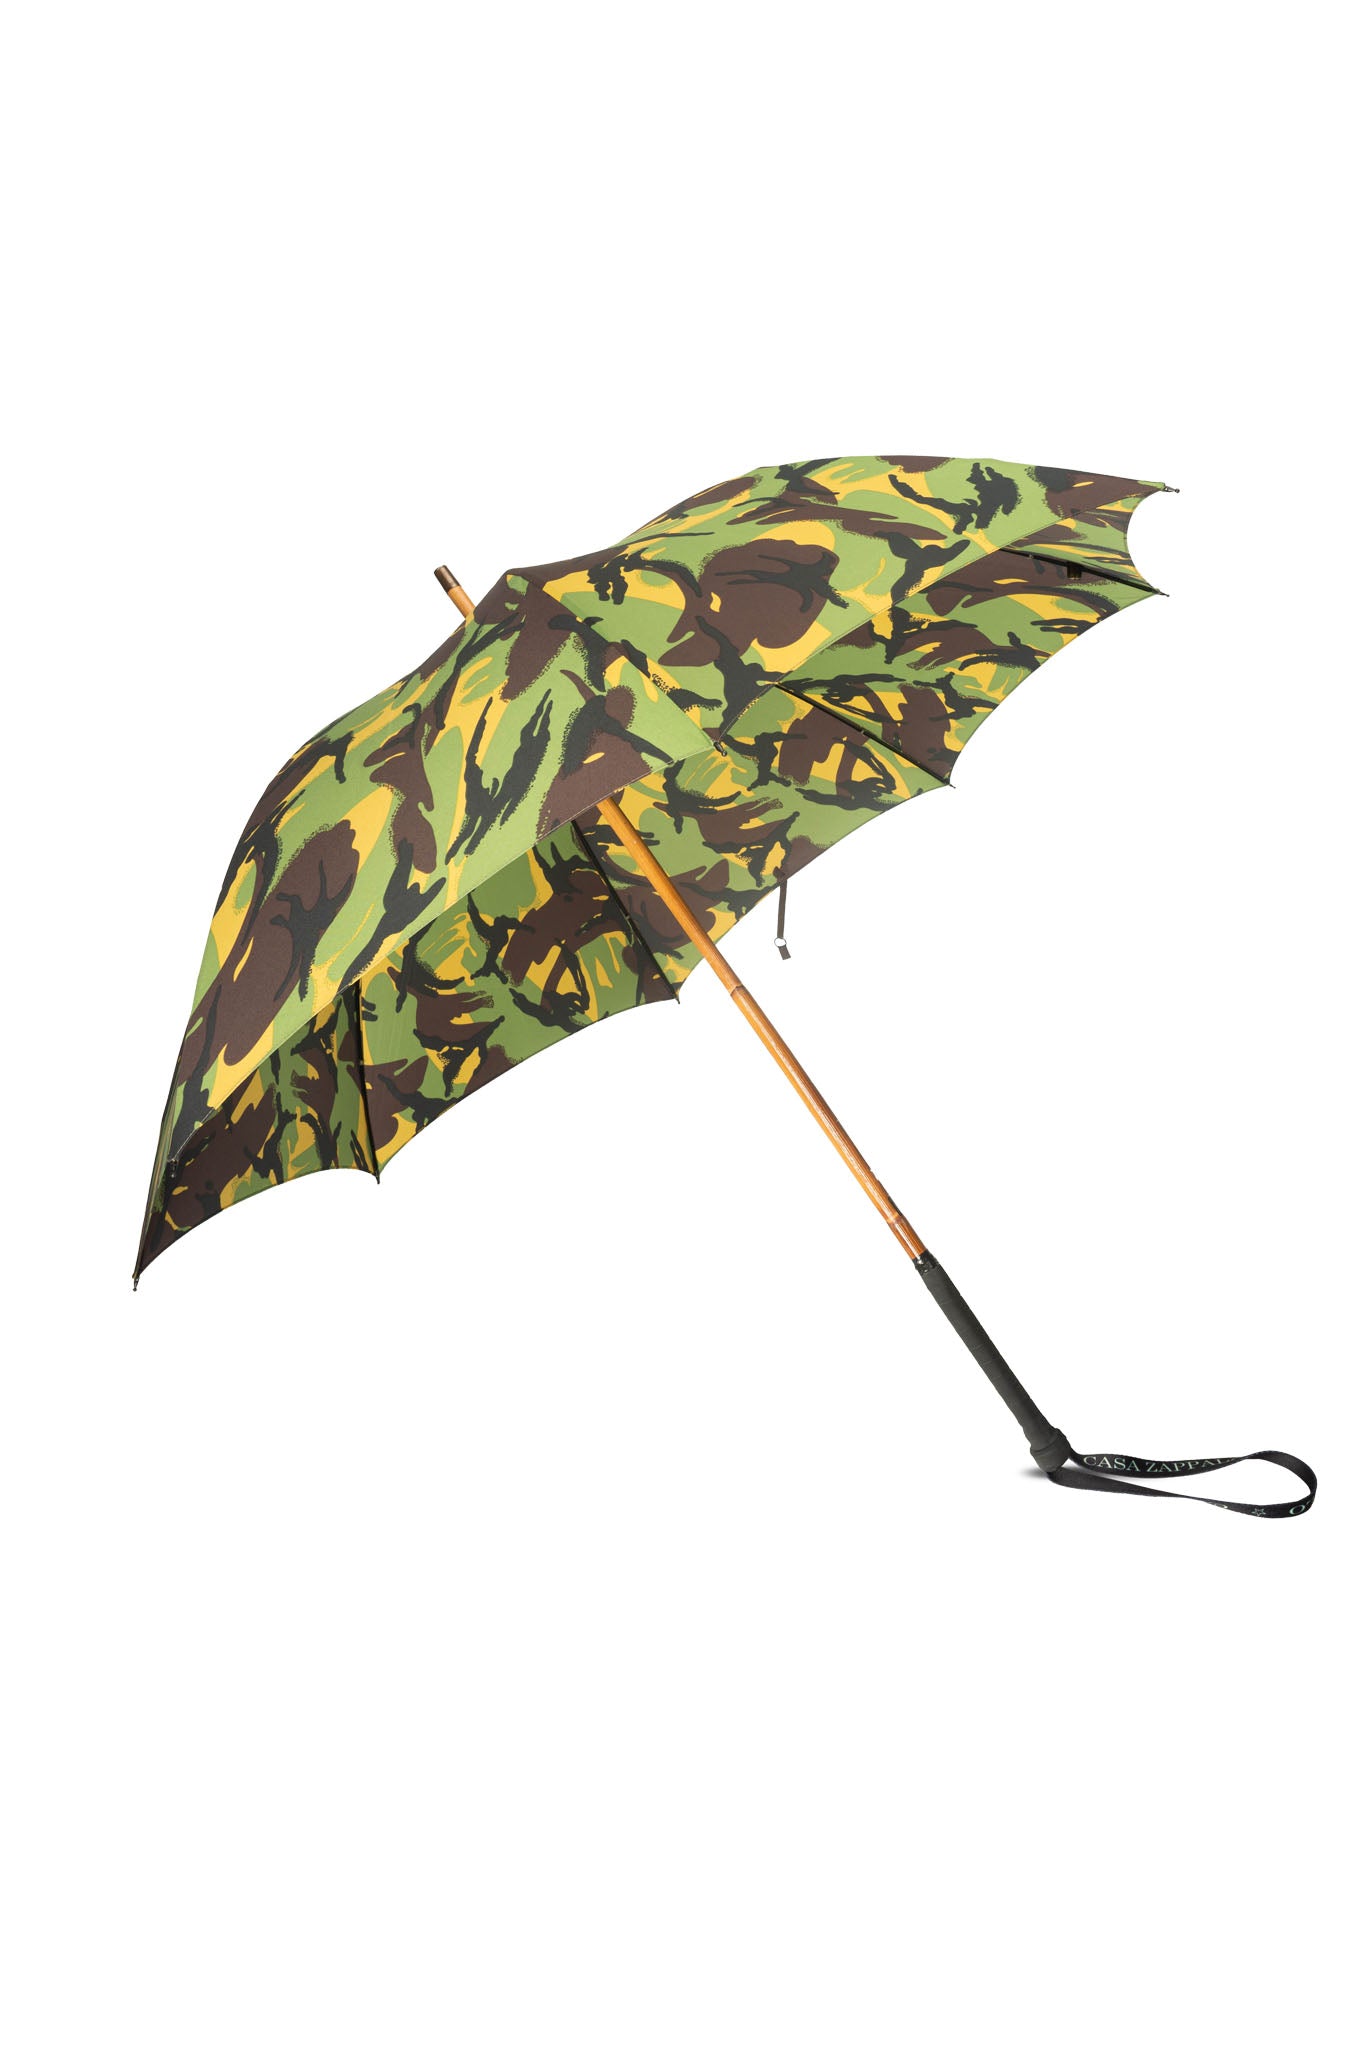 Polo Mallet Umbrella Woodland Camouflage